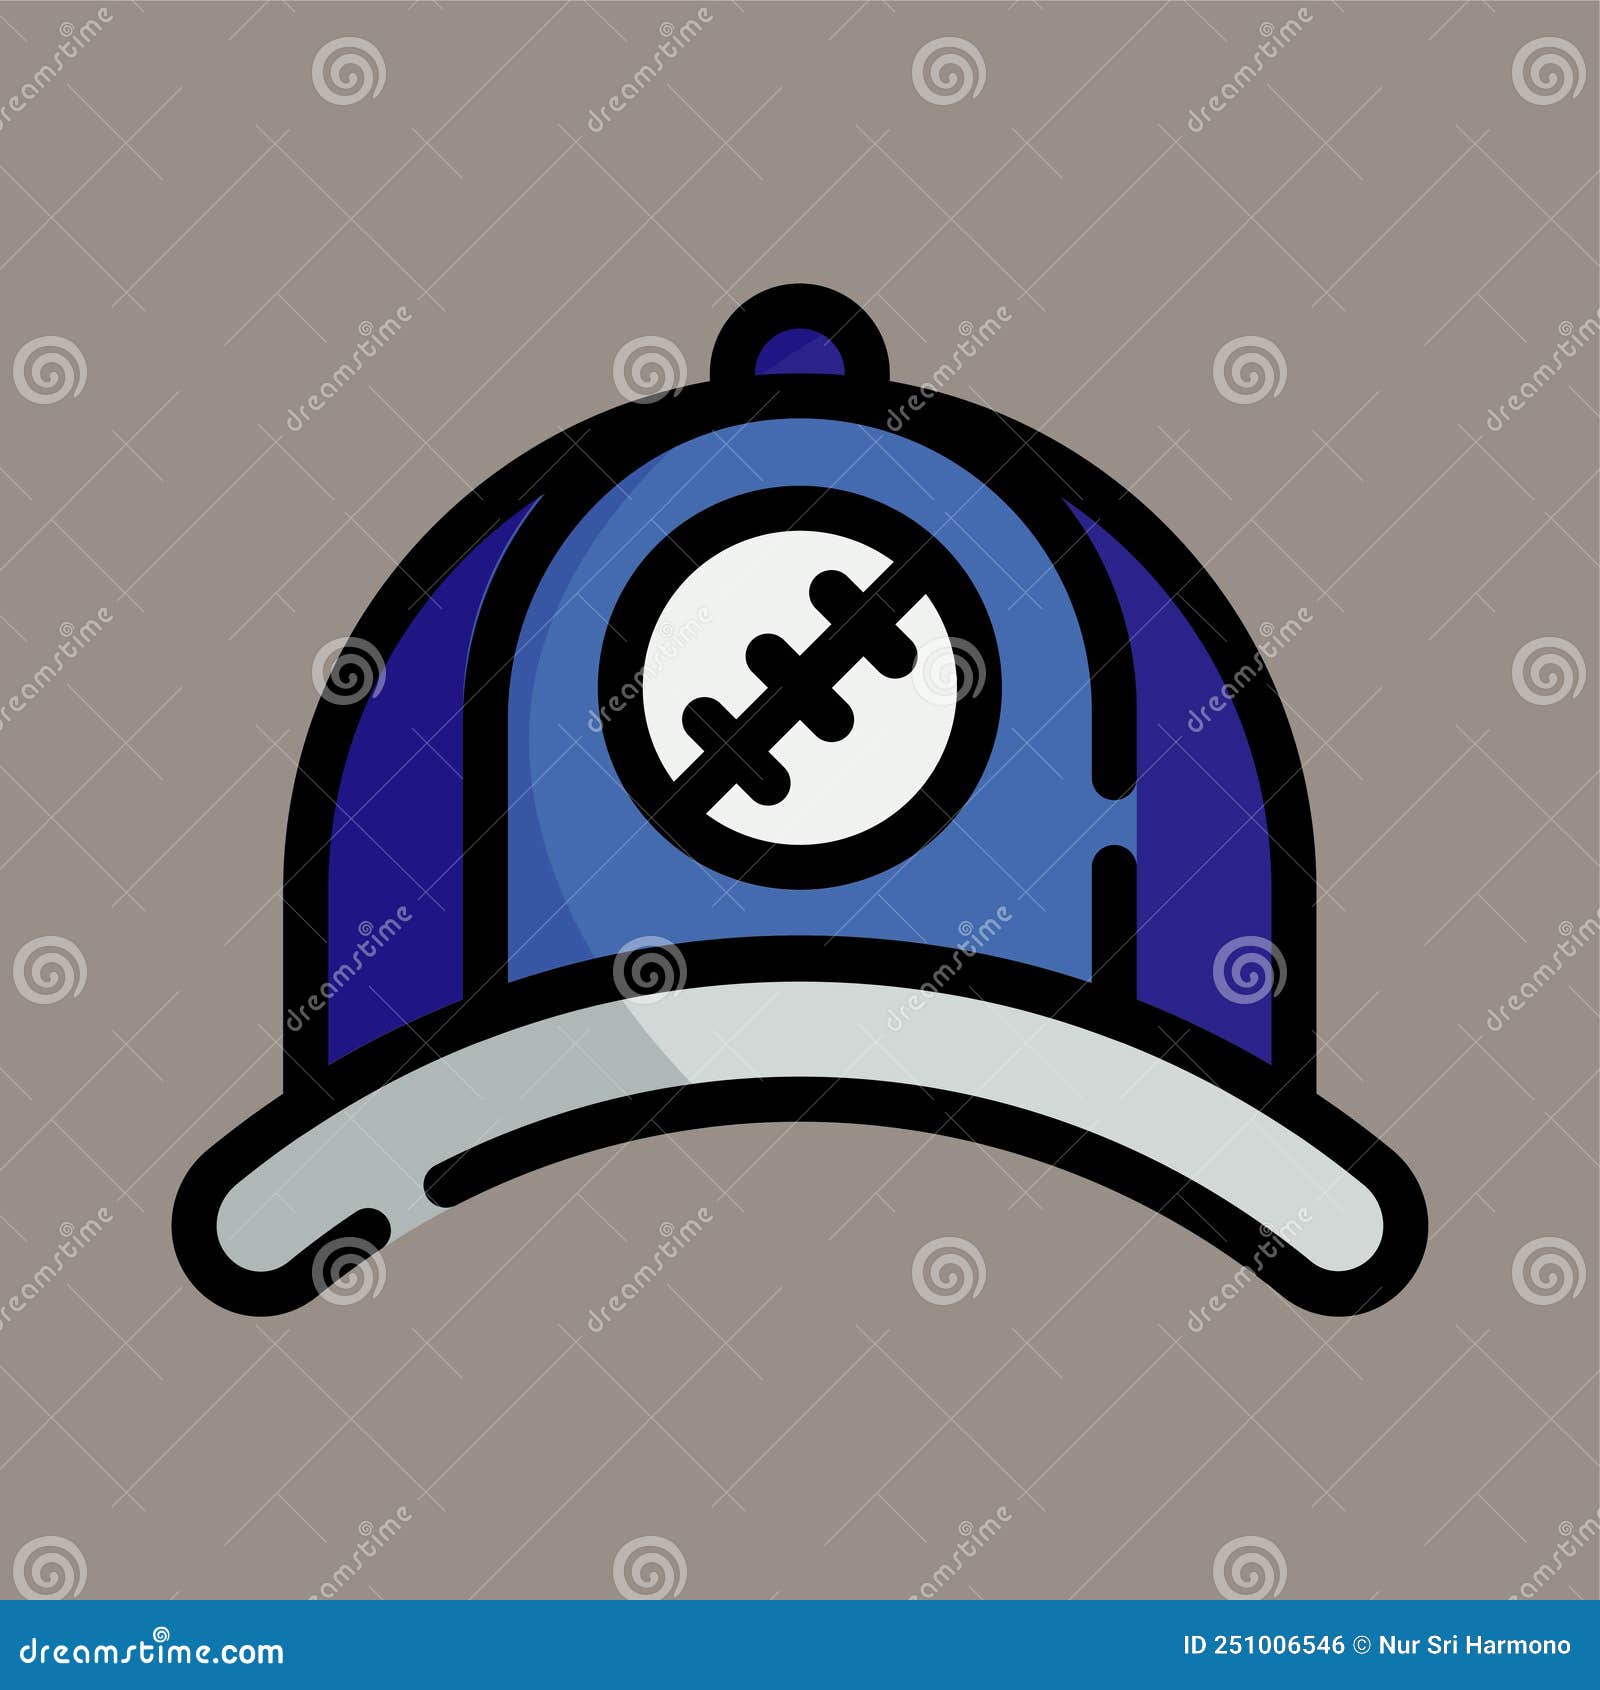 Icon Logo Vector Illustration Of A Baseball Cap Isolated On Gray